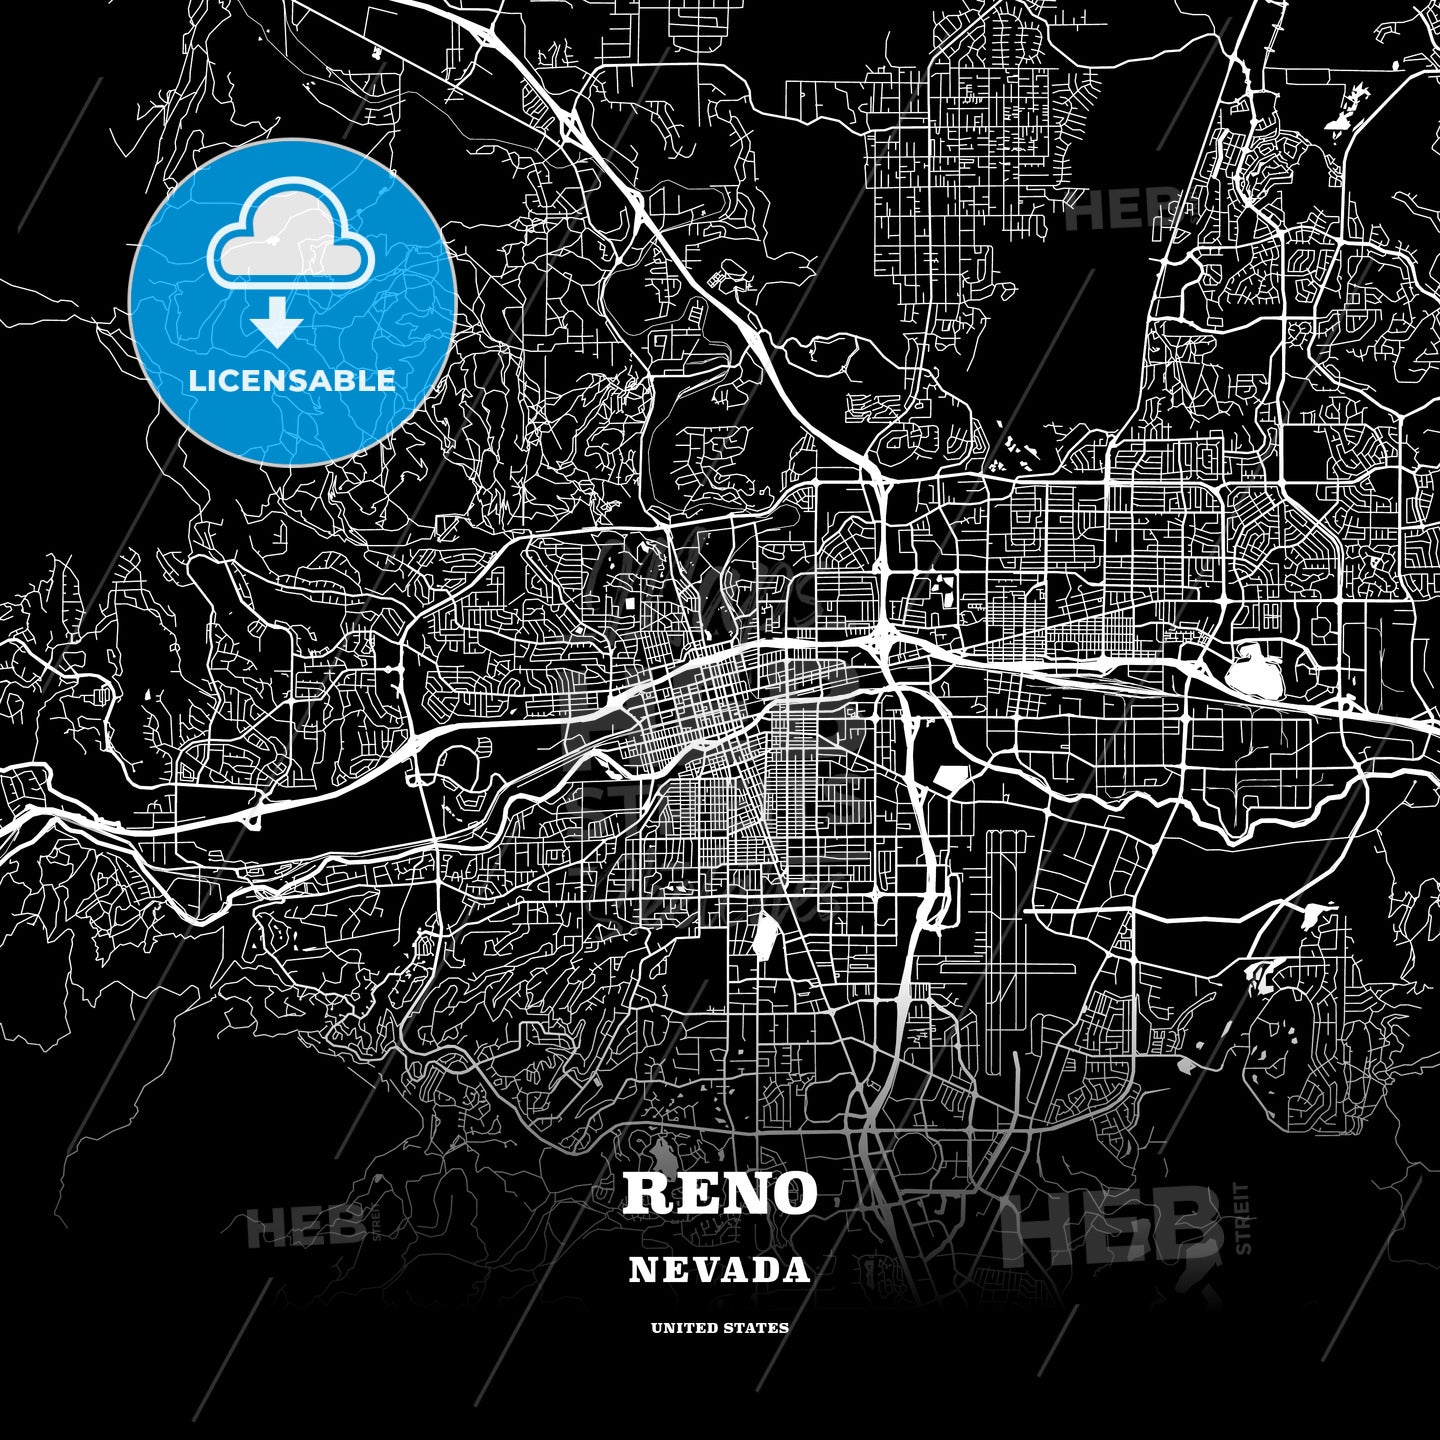 Reno, Nevada, USA map